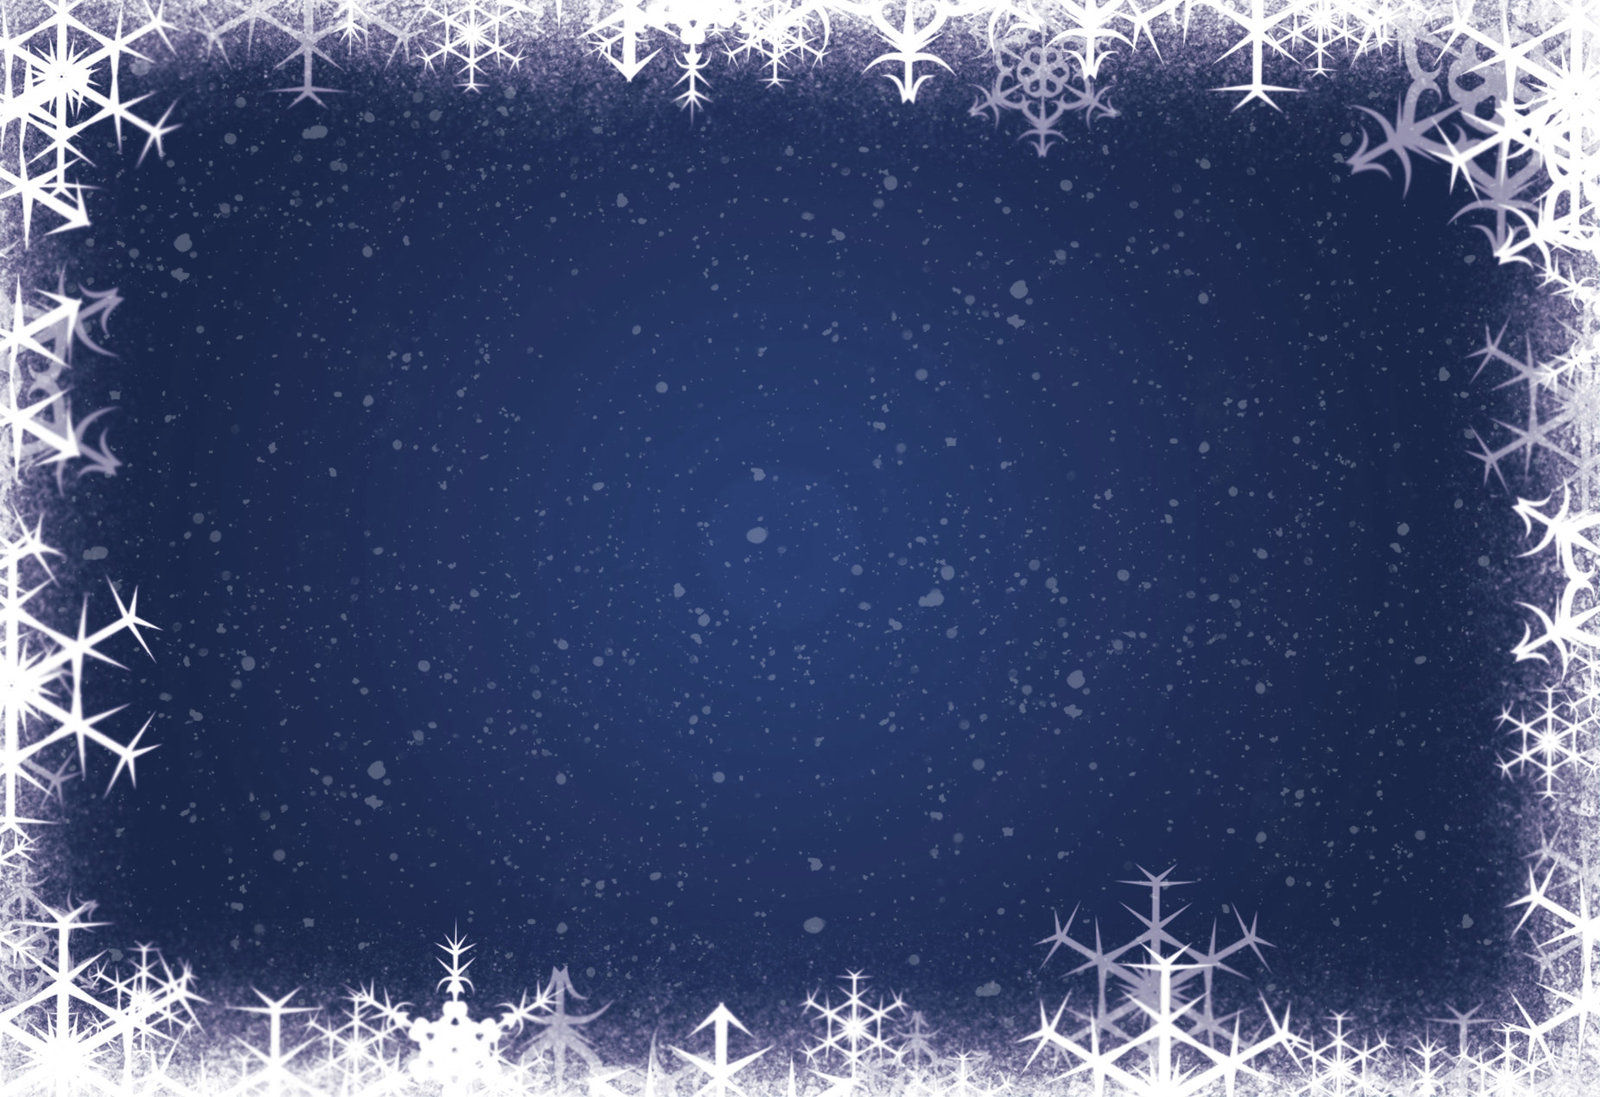 Snowflakes Background Image